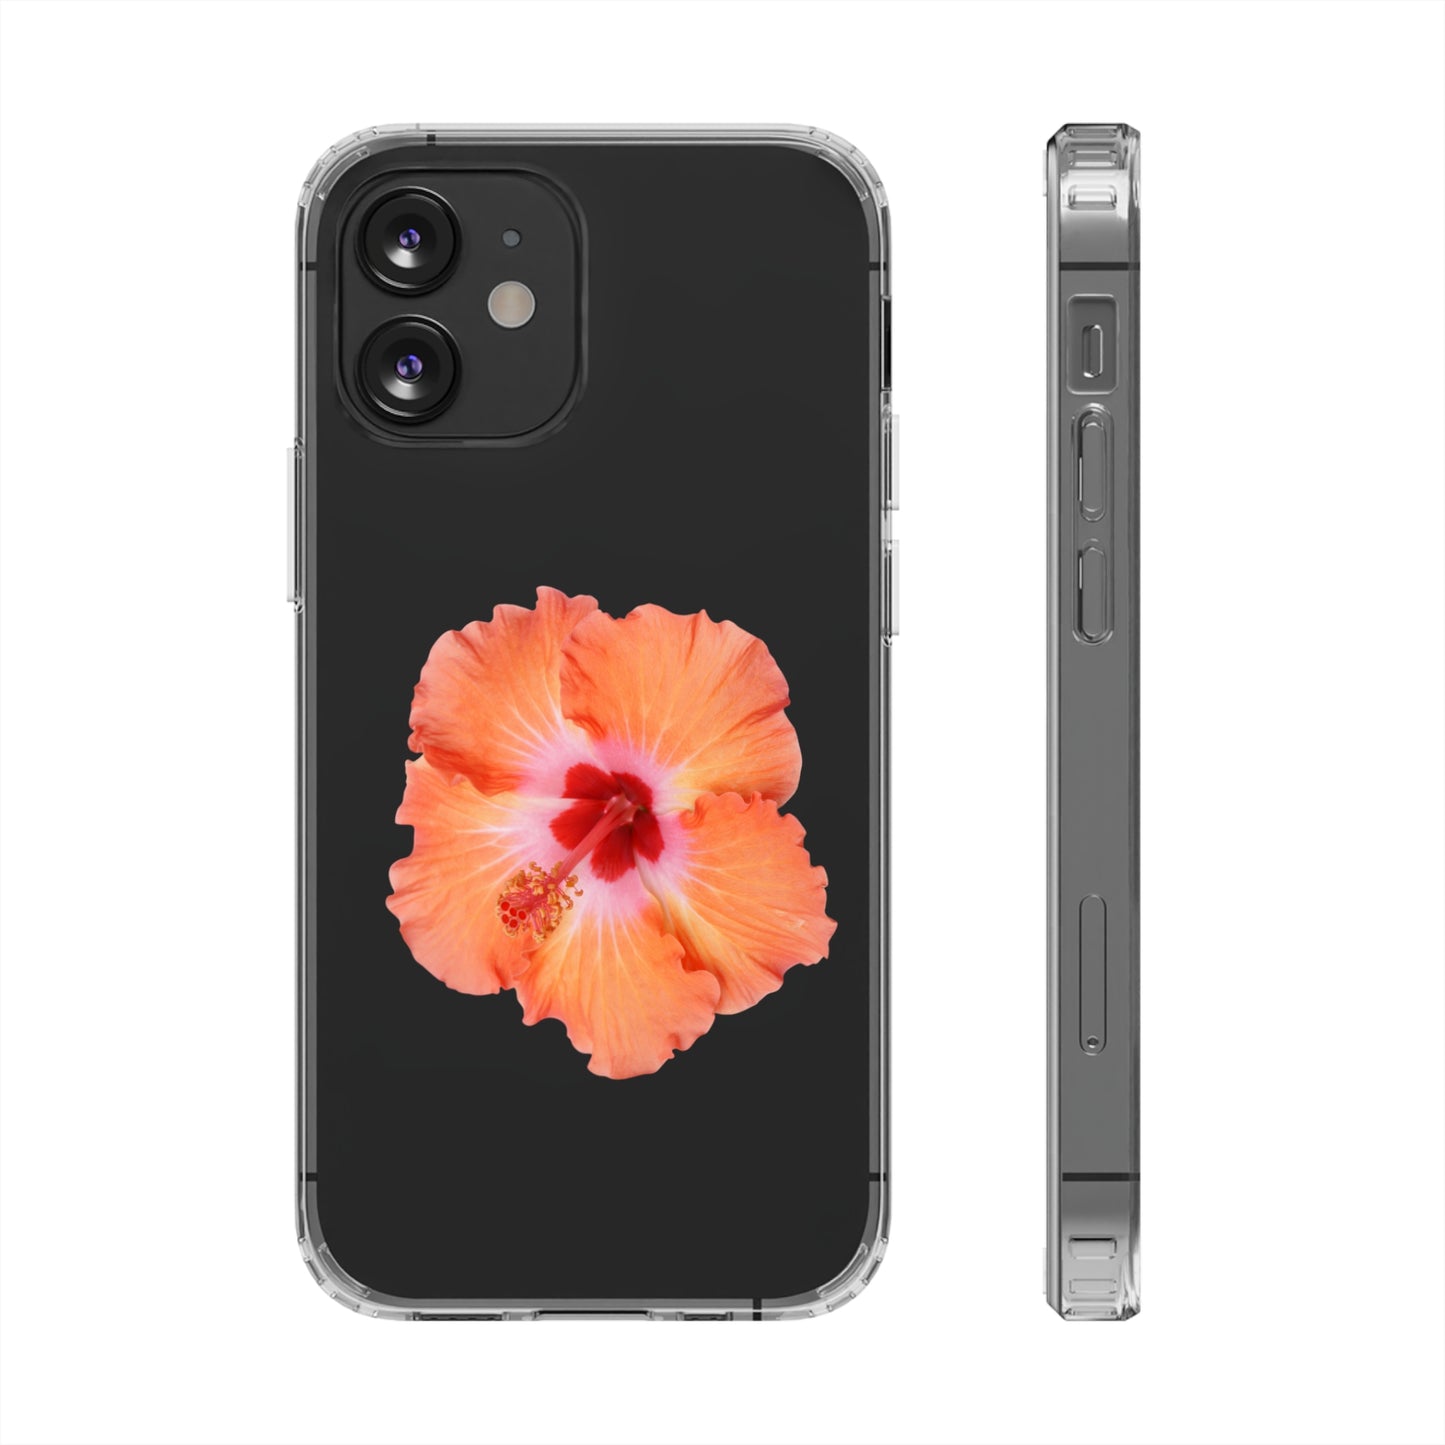 'I want flowers' case